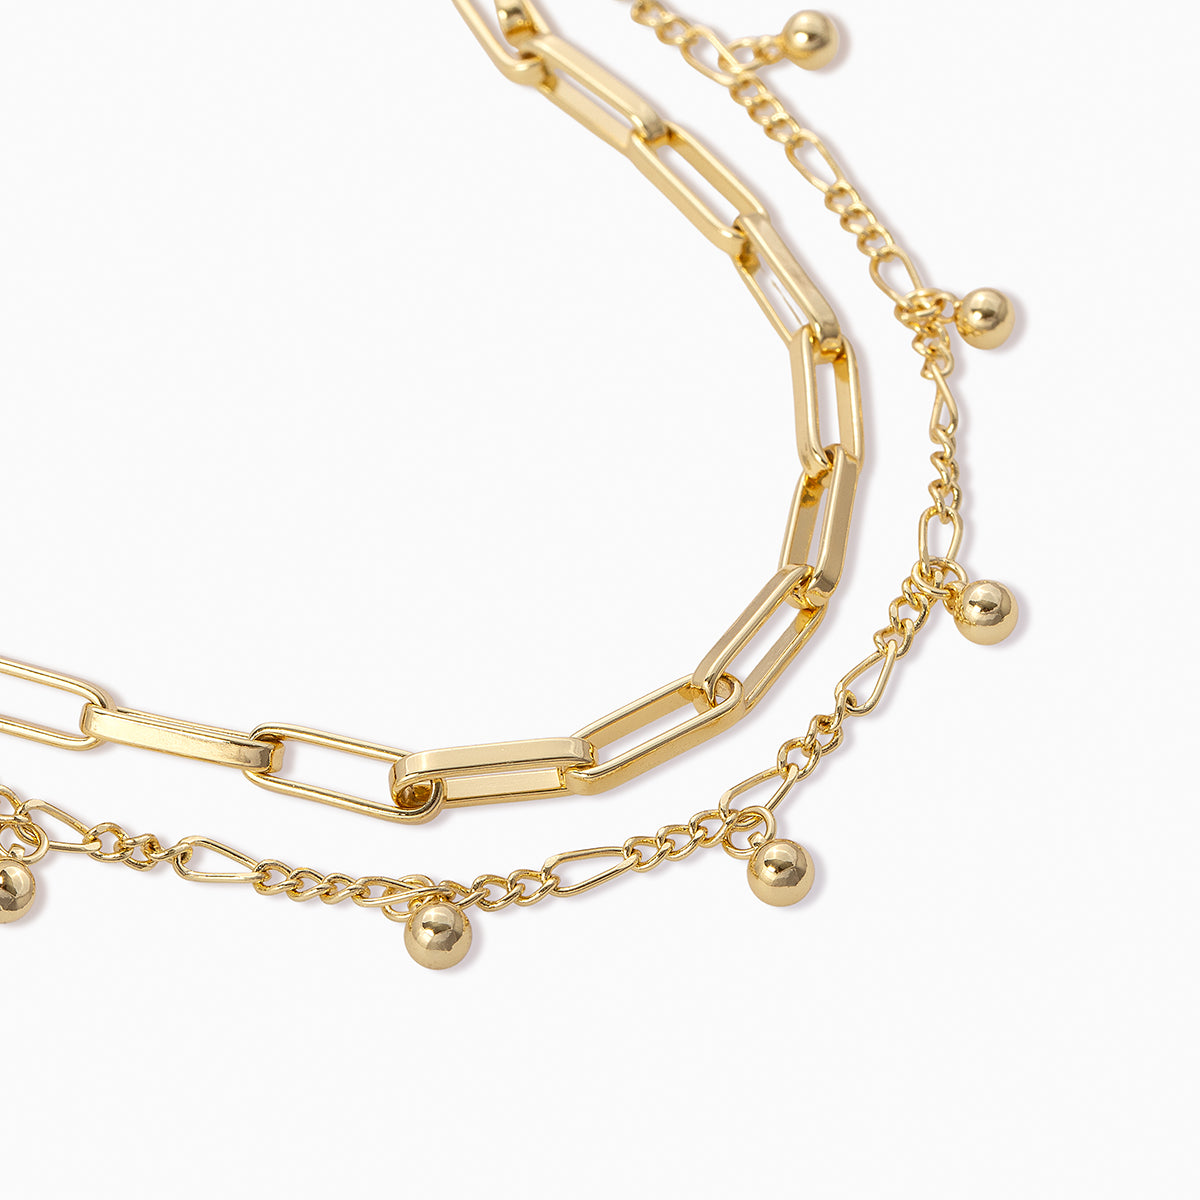 Balance Bracelet | Gold | Product Detail Image | Uncommon James